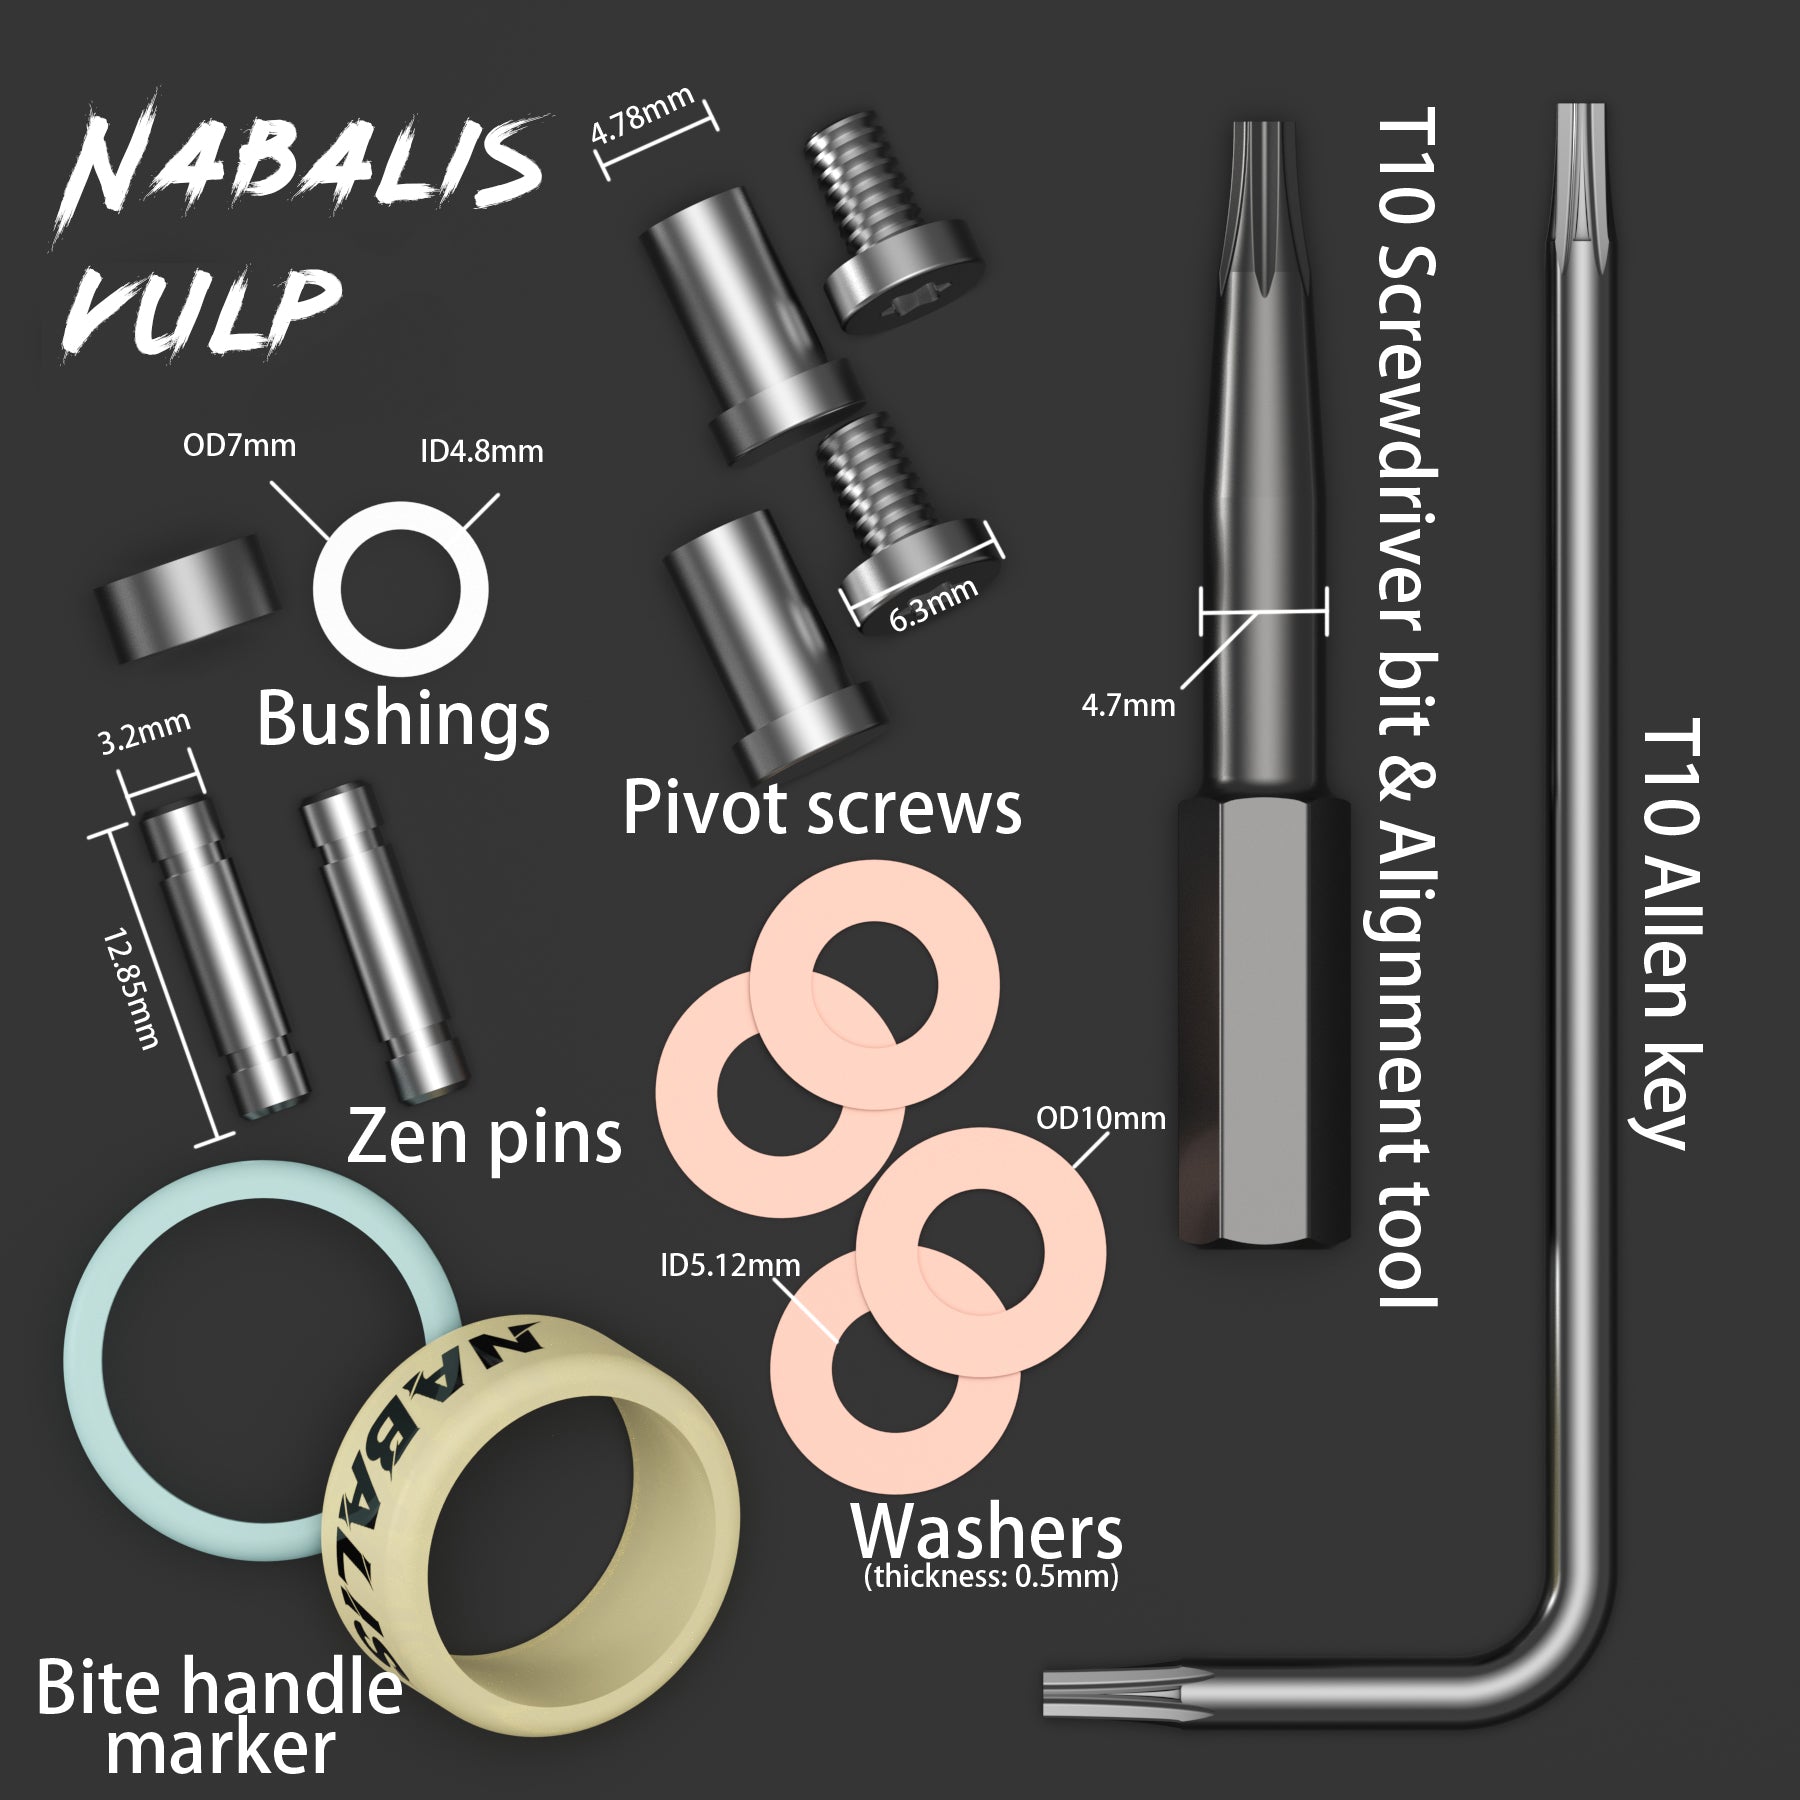 Nabalis Bushing Balisong용 버터플라이 나이프 하드웨어 키트